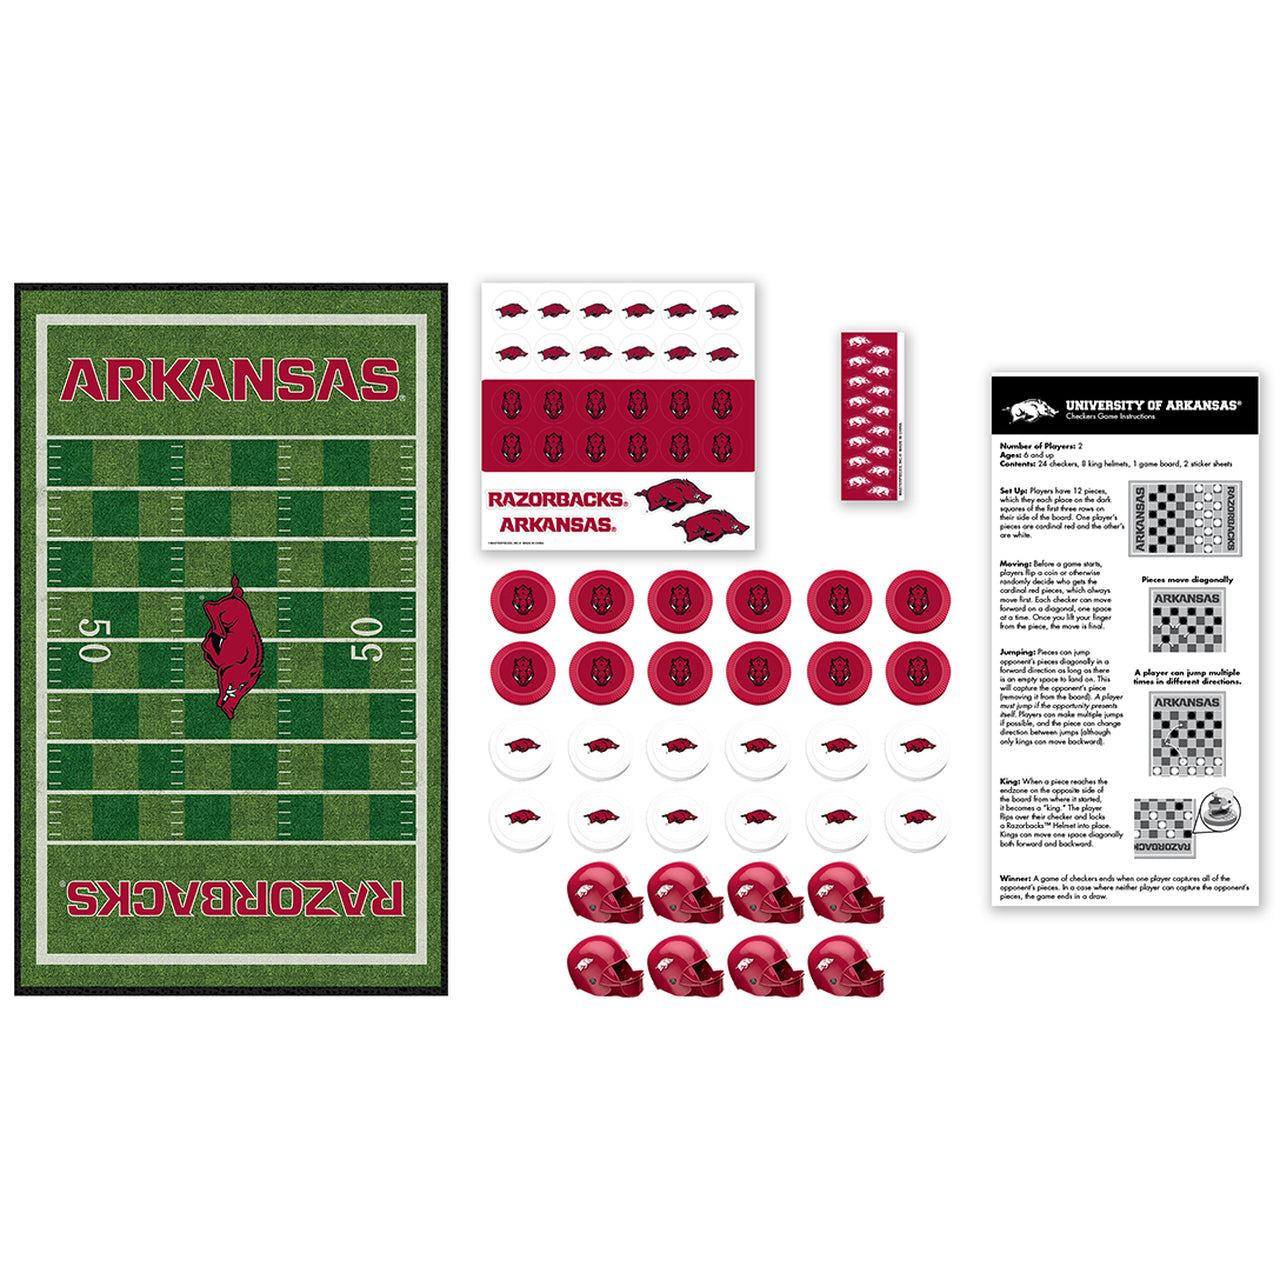 Arkansas Razorbacks Checkers Board Game by Masterpieces